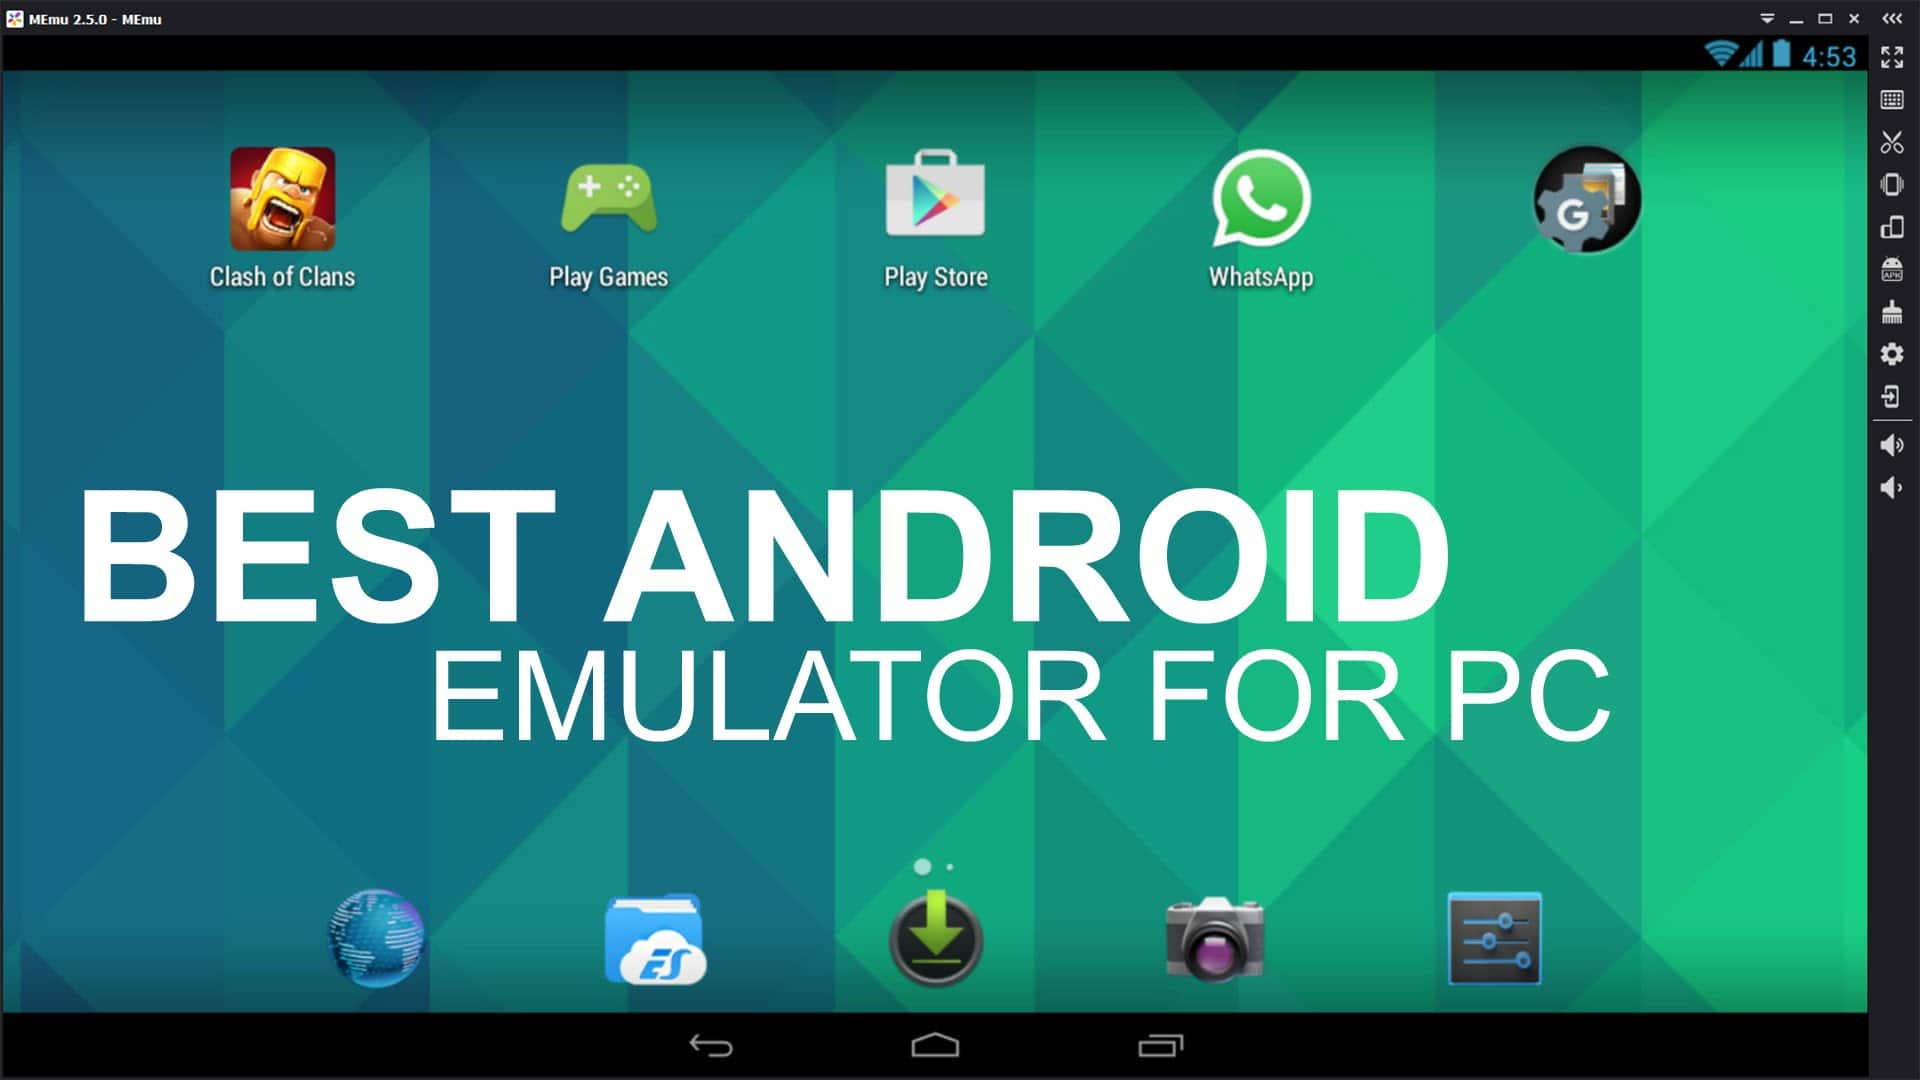 Android Version 6 Emulator